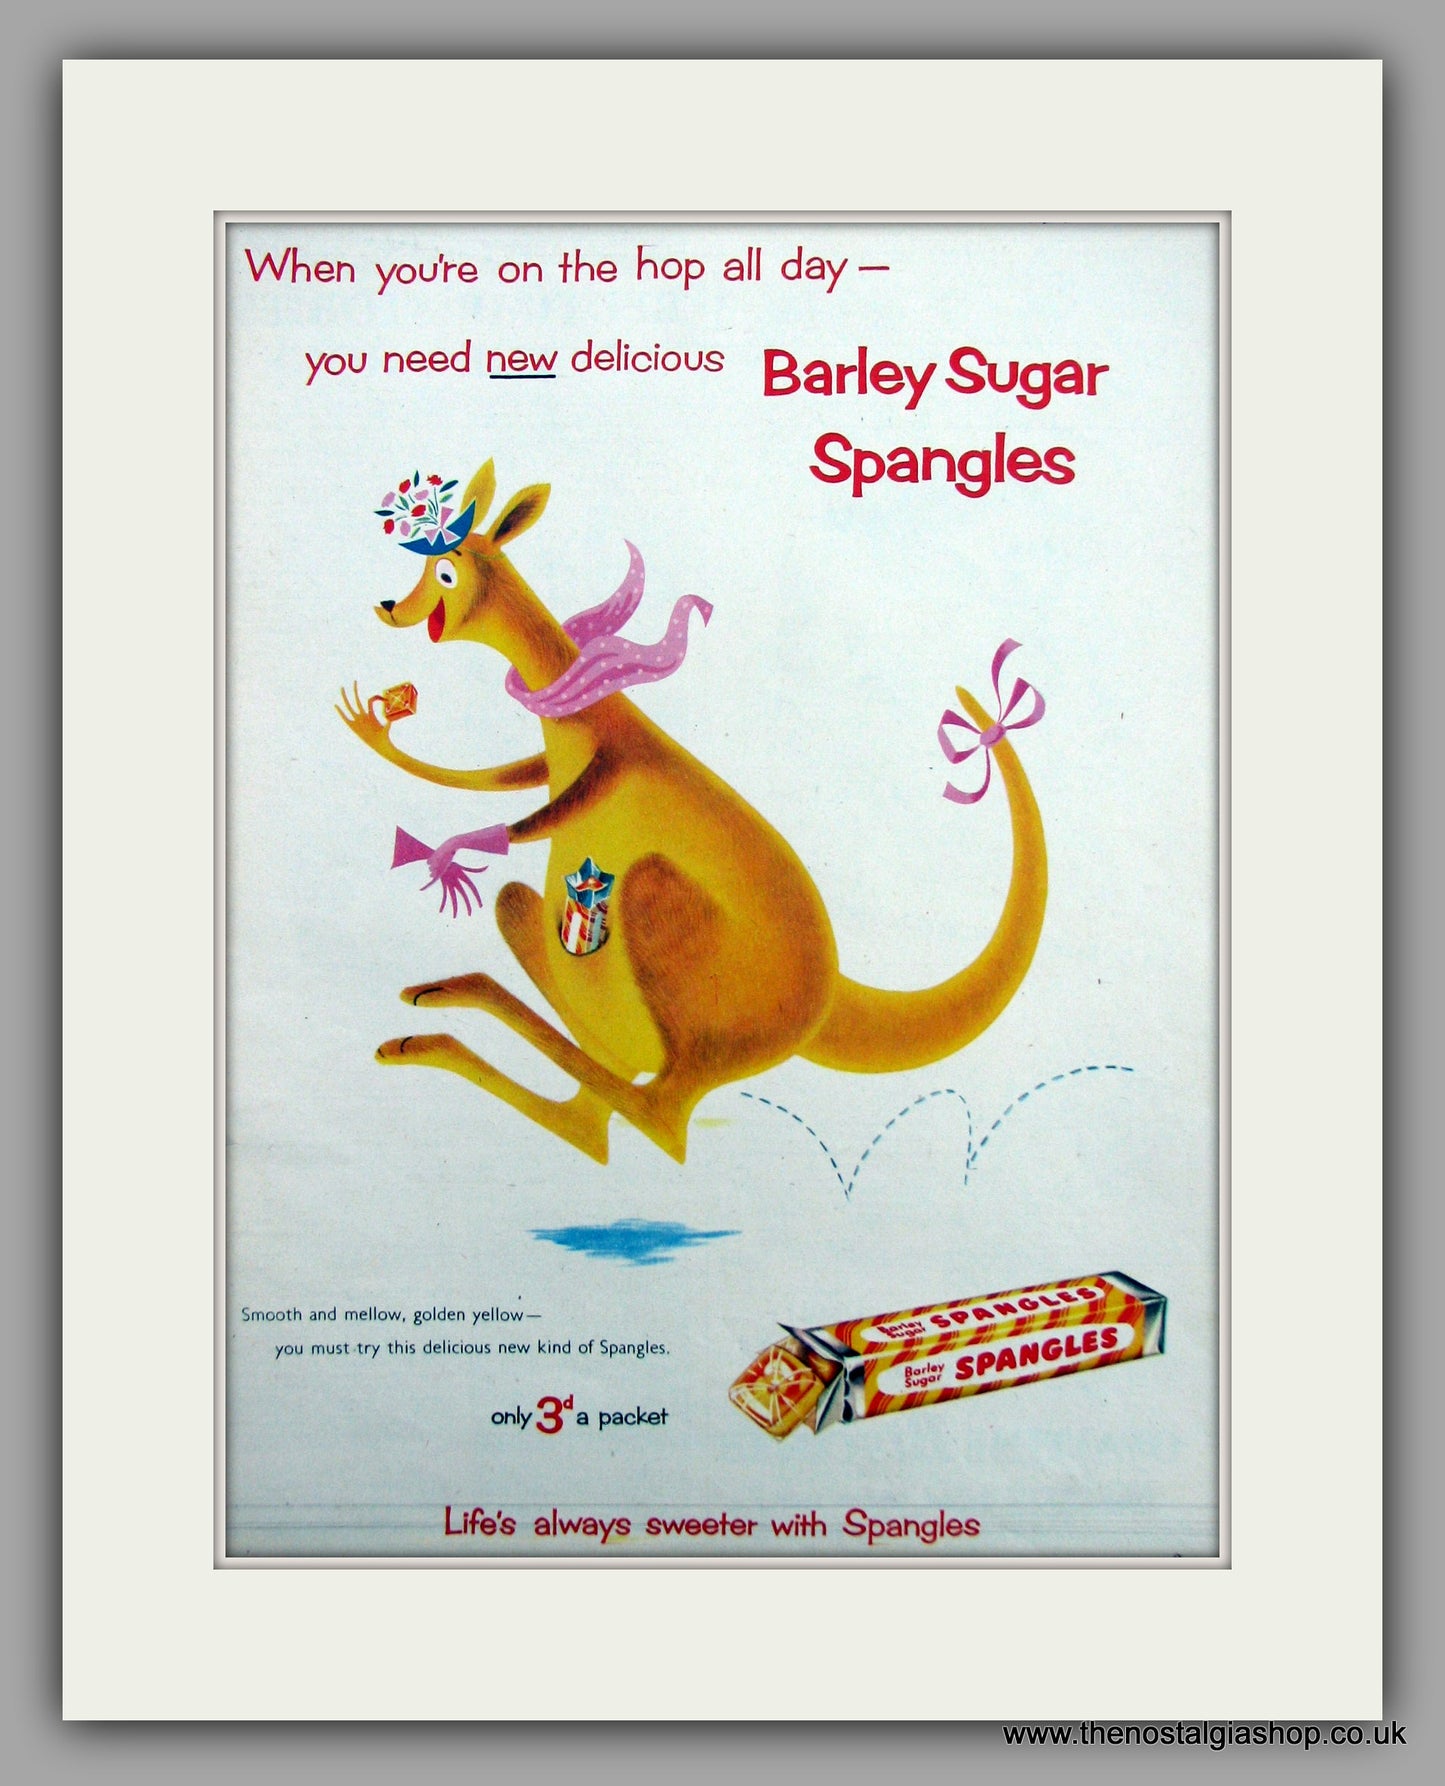 Spangles Barley Sugar Sweets. Original Advert 1954 (ref AD9814)